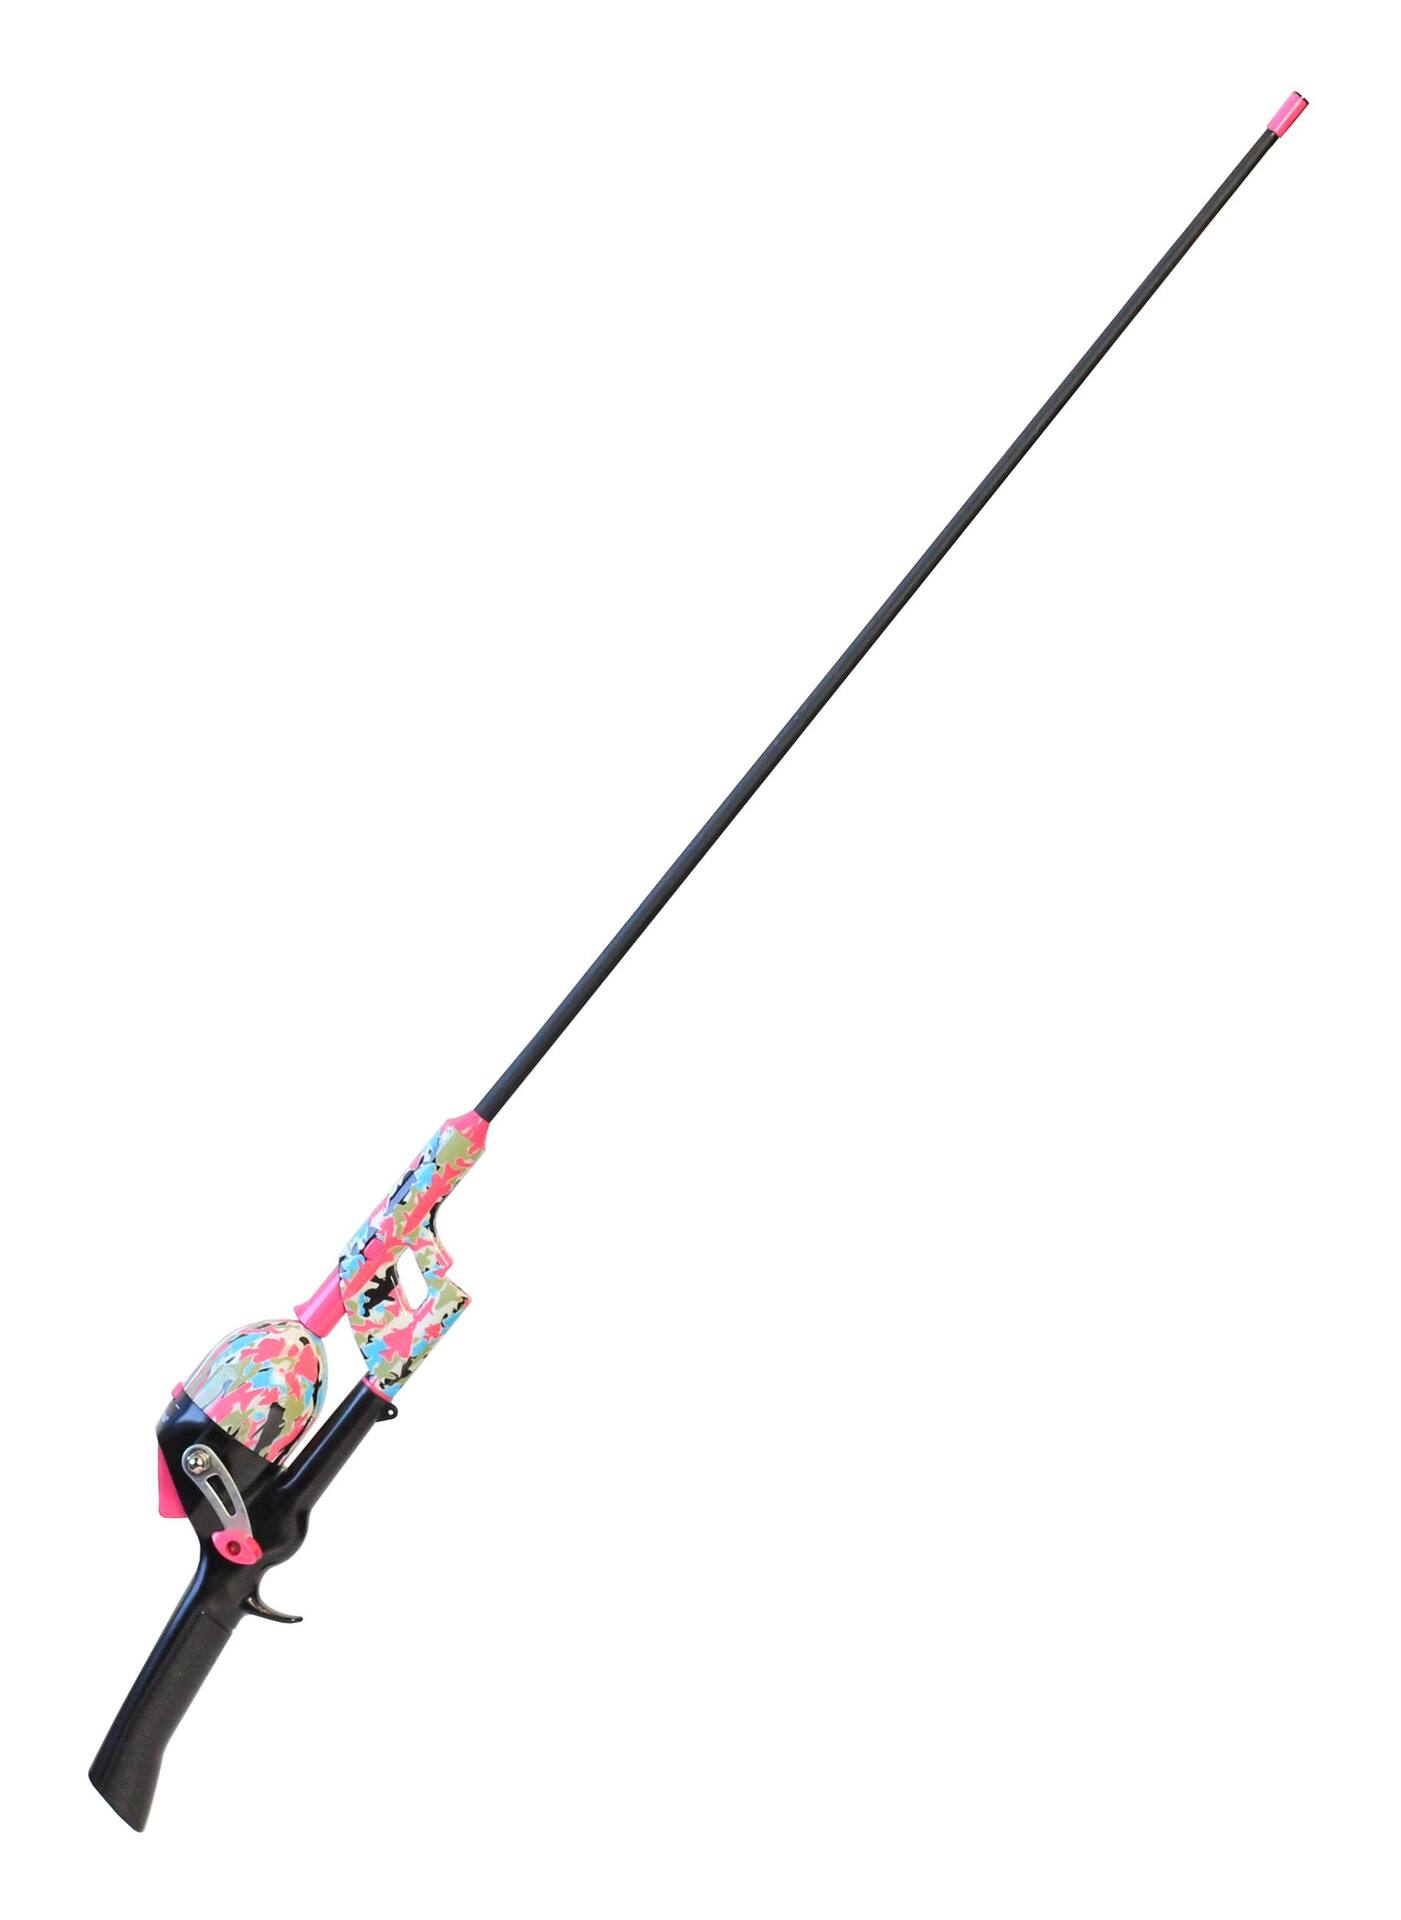 Paw Patrol Tangle-free Telescopic Fishing Rod For Kids 6 Lb. Line - NEW